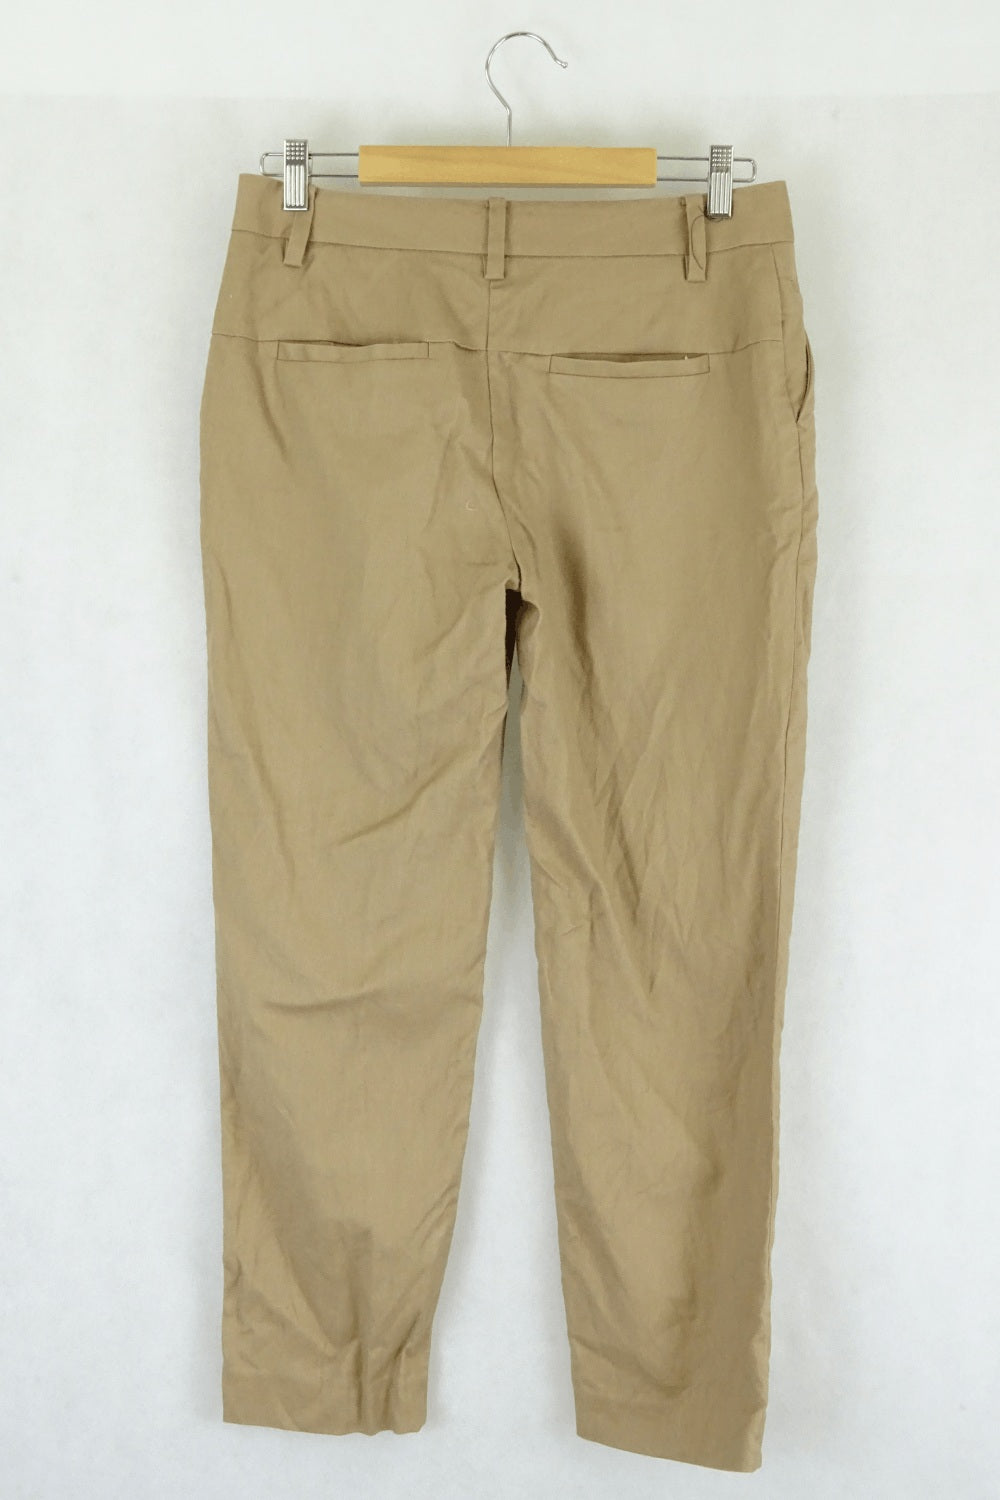 Country Road brown pants 8